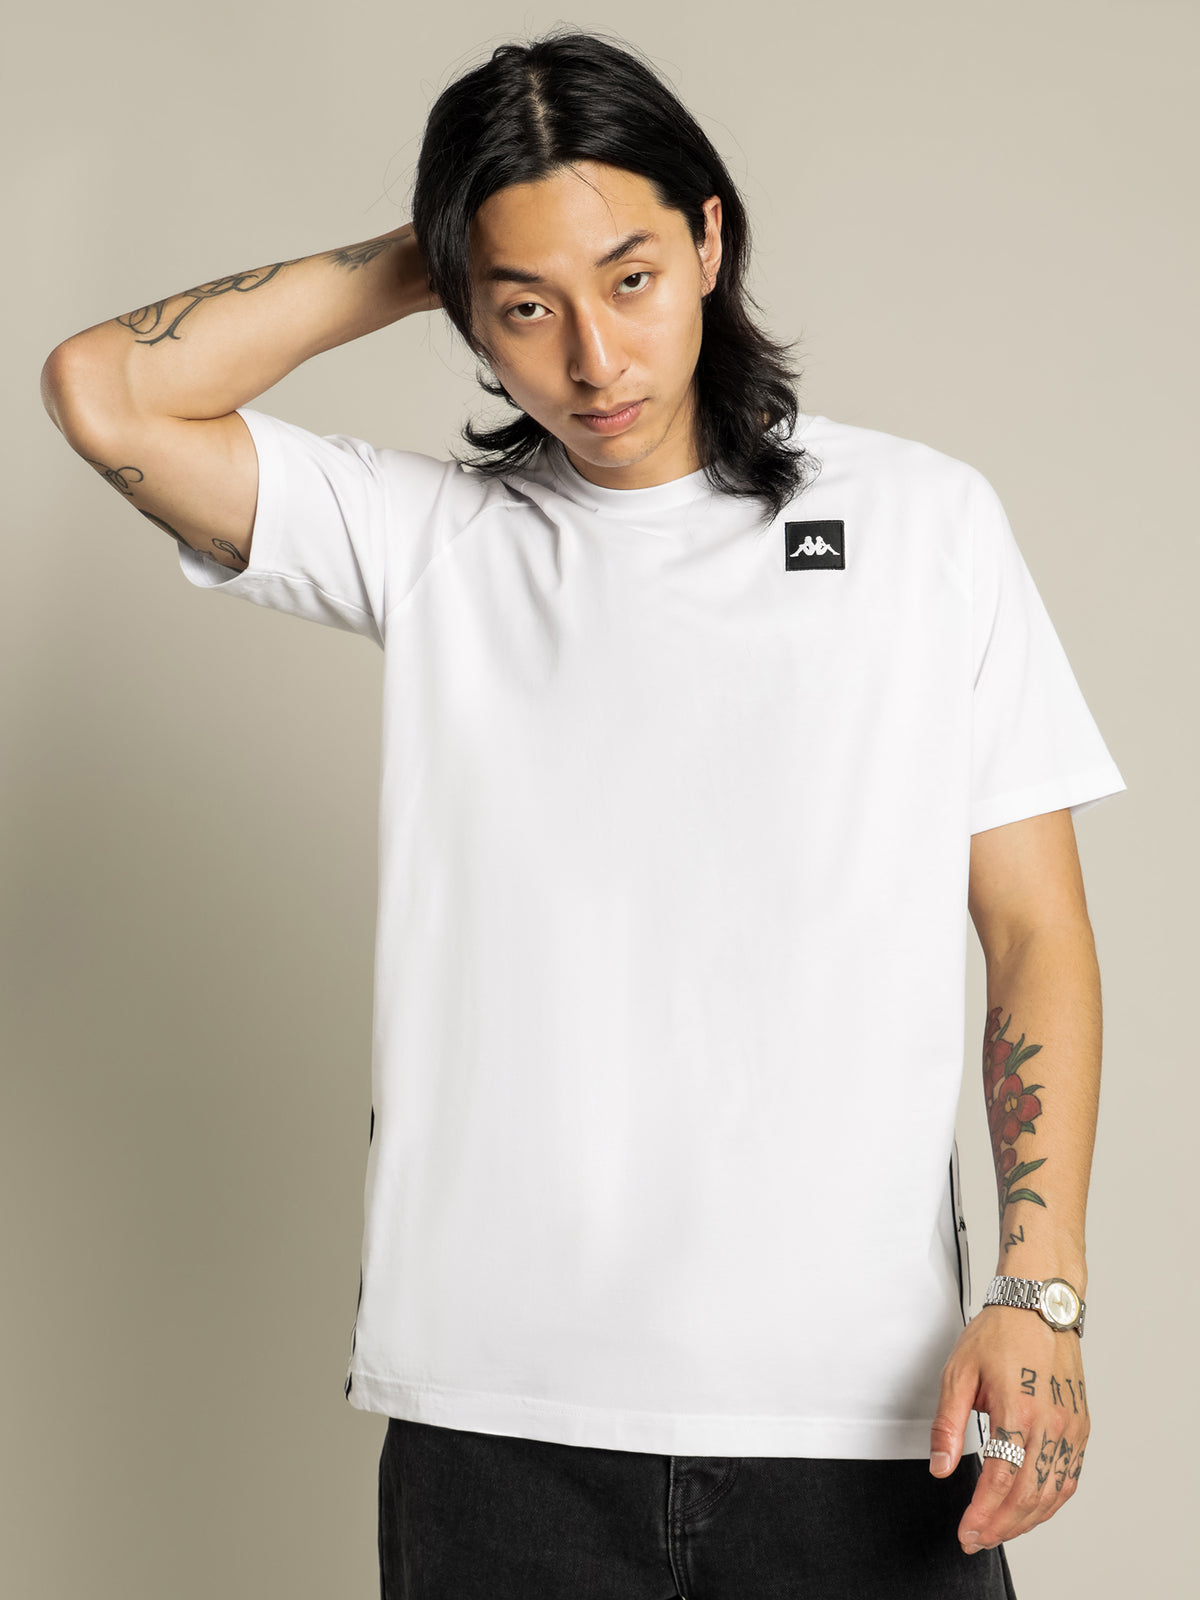 Authentic JPN Crew T-Shirt in White